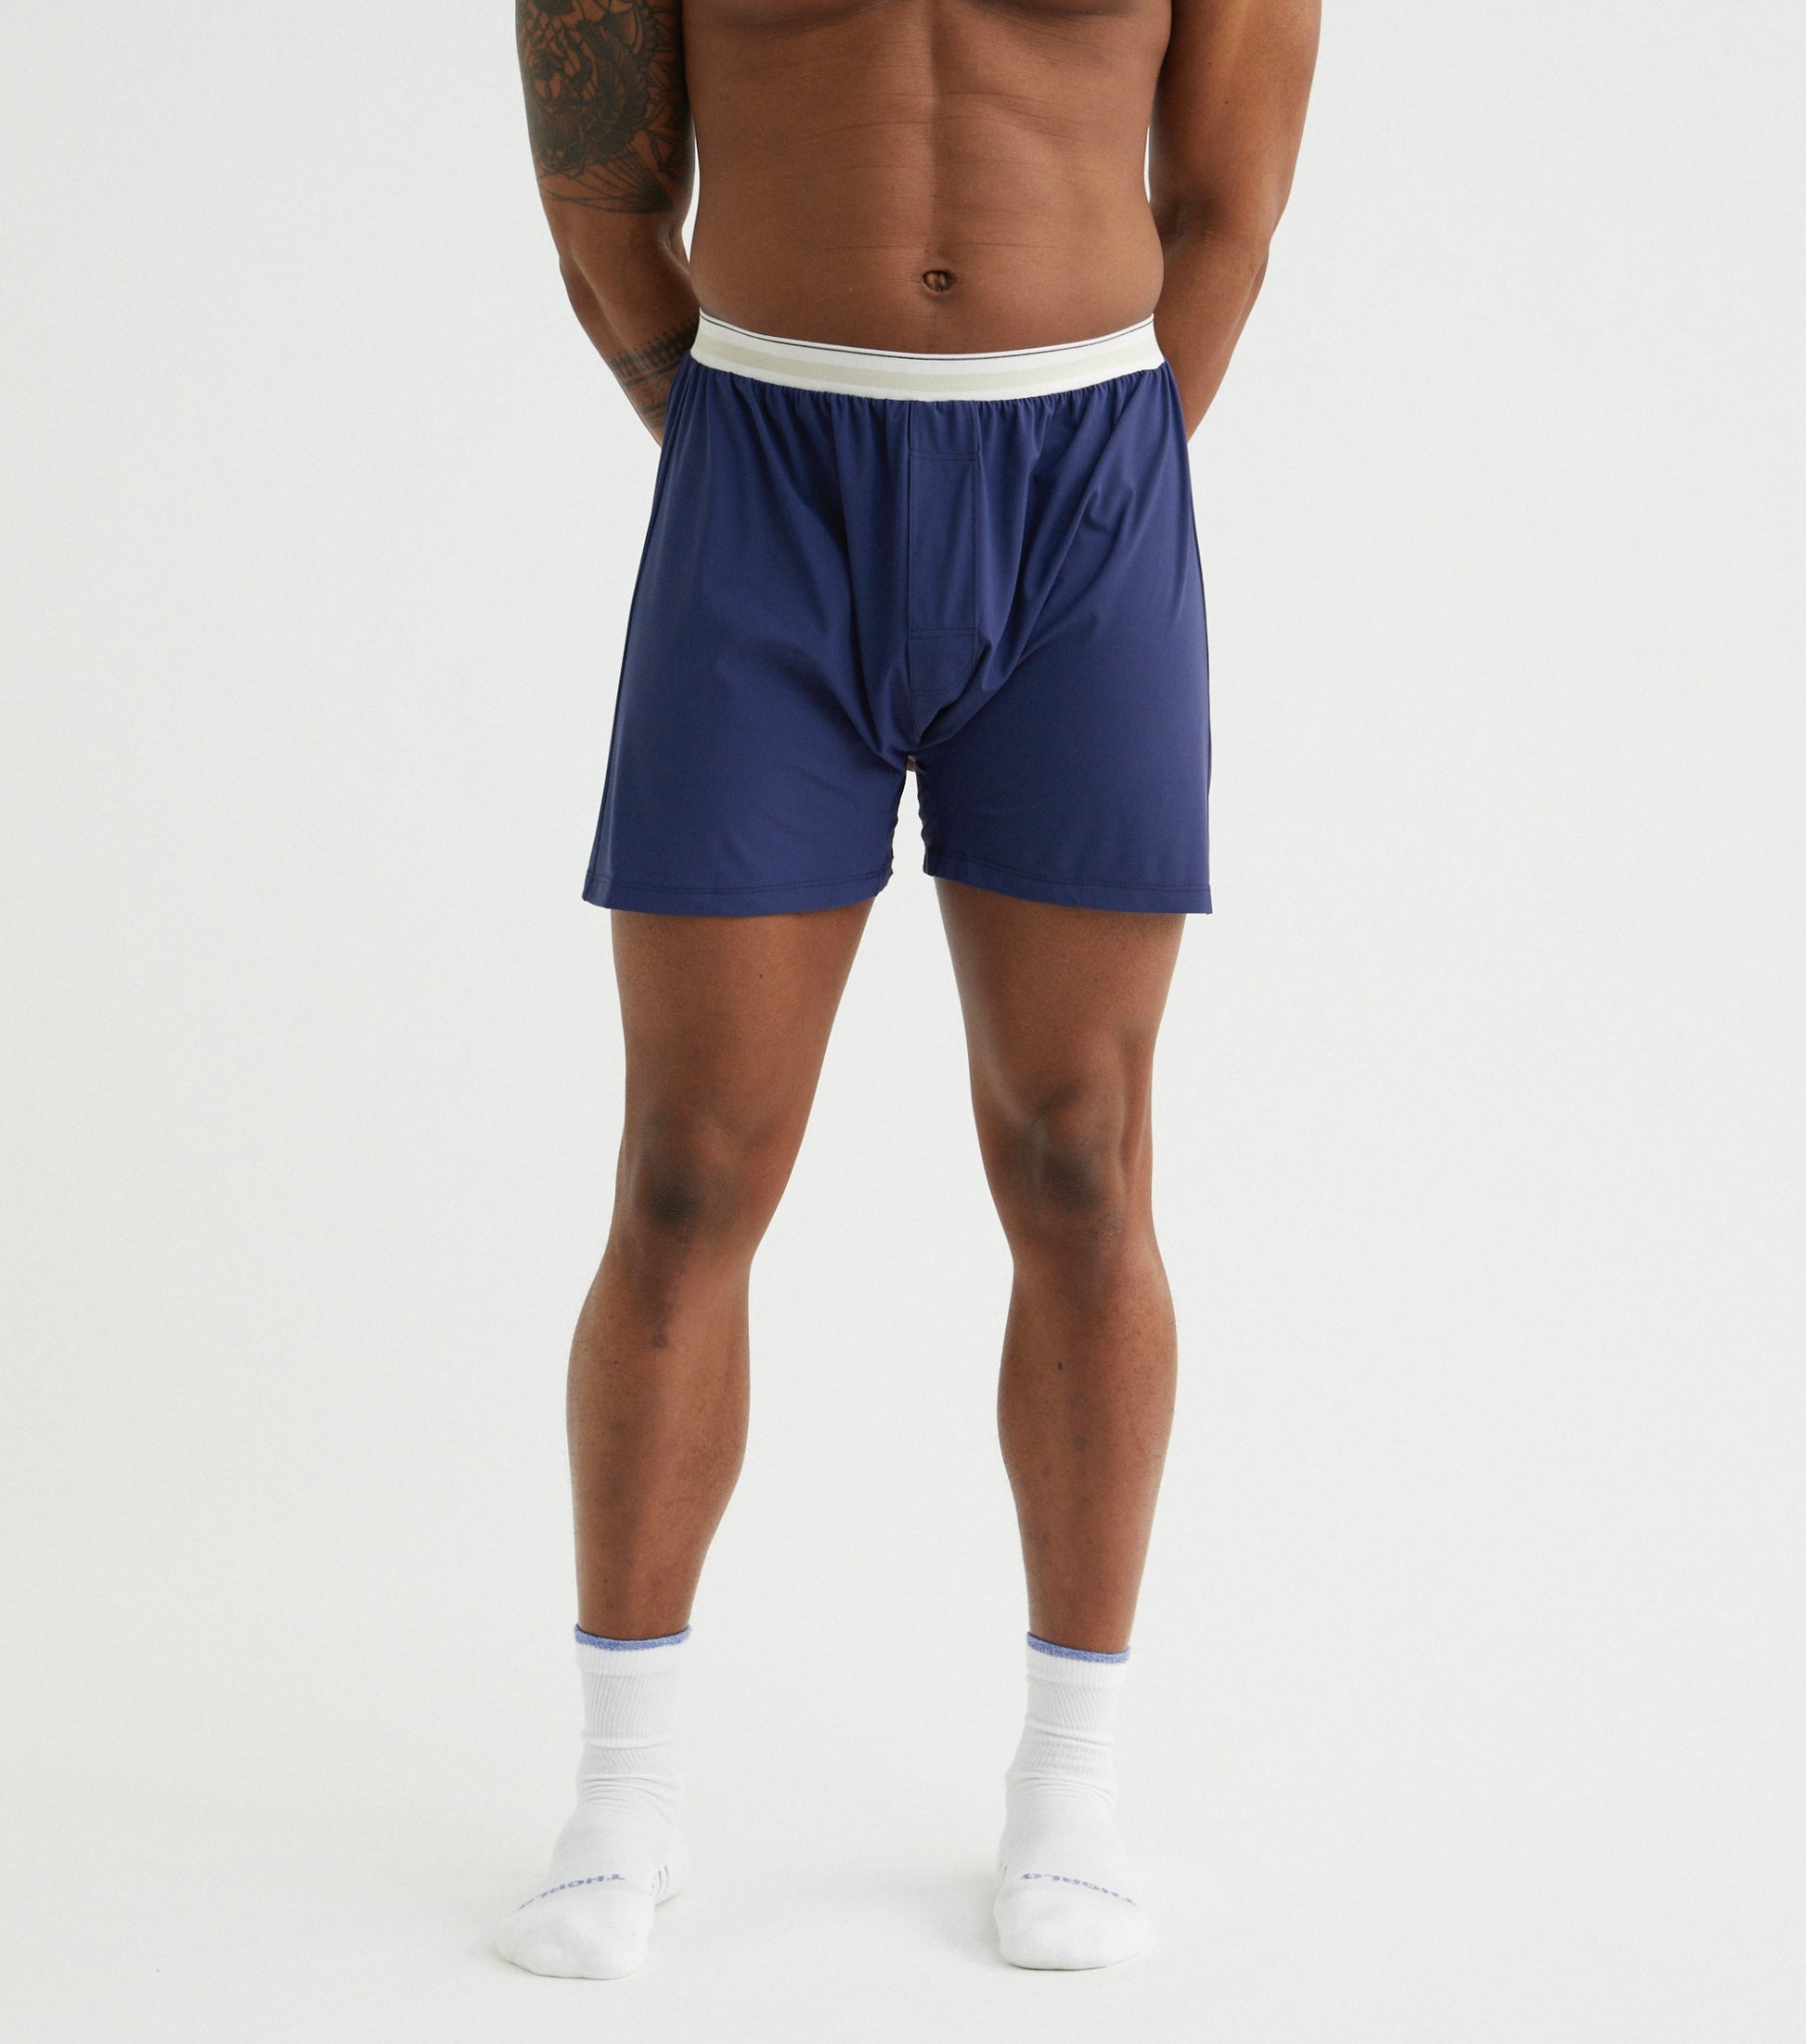 Mens Athletic Boxer Shorts